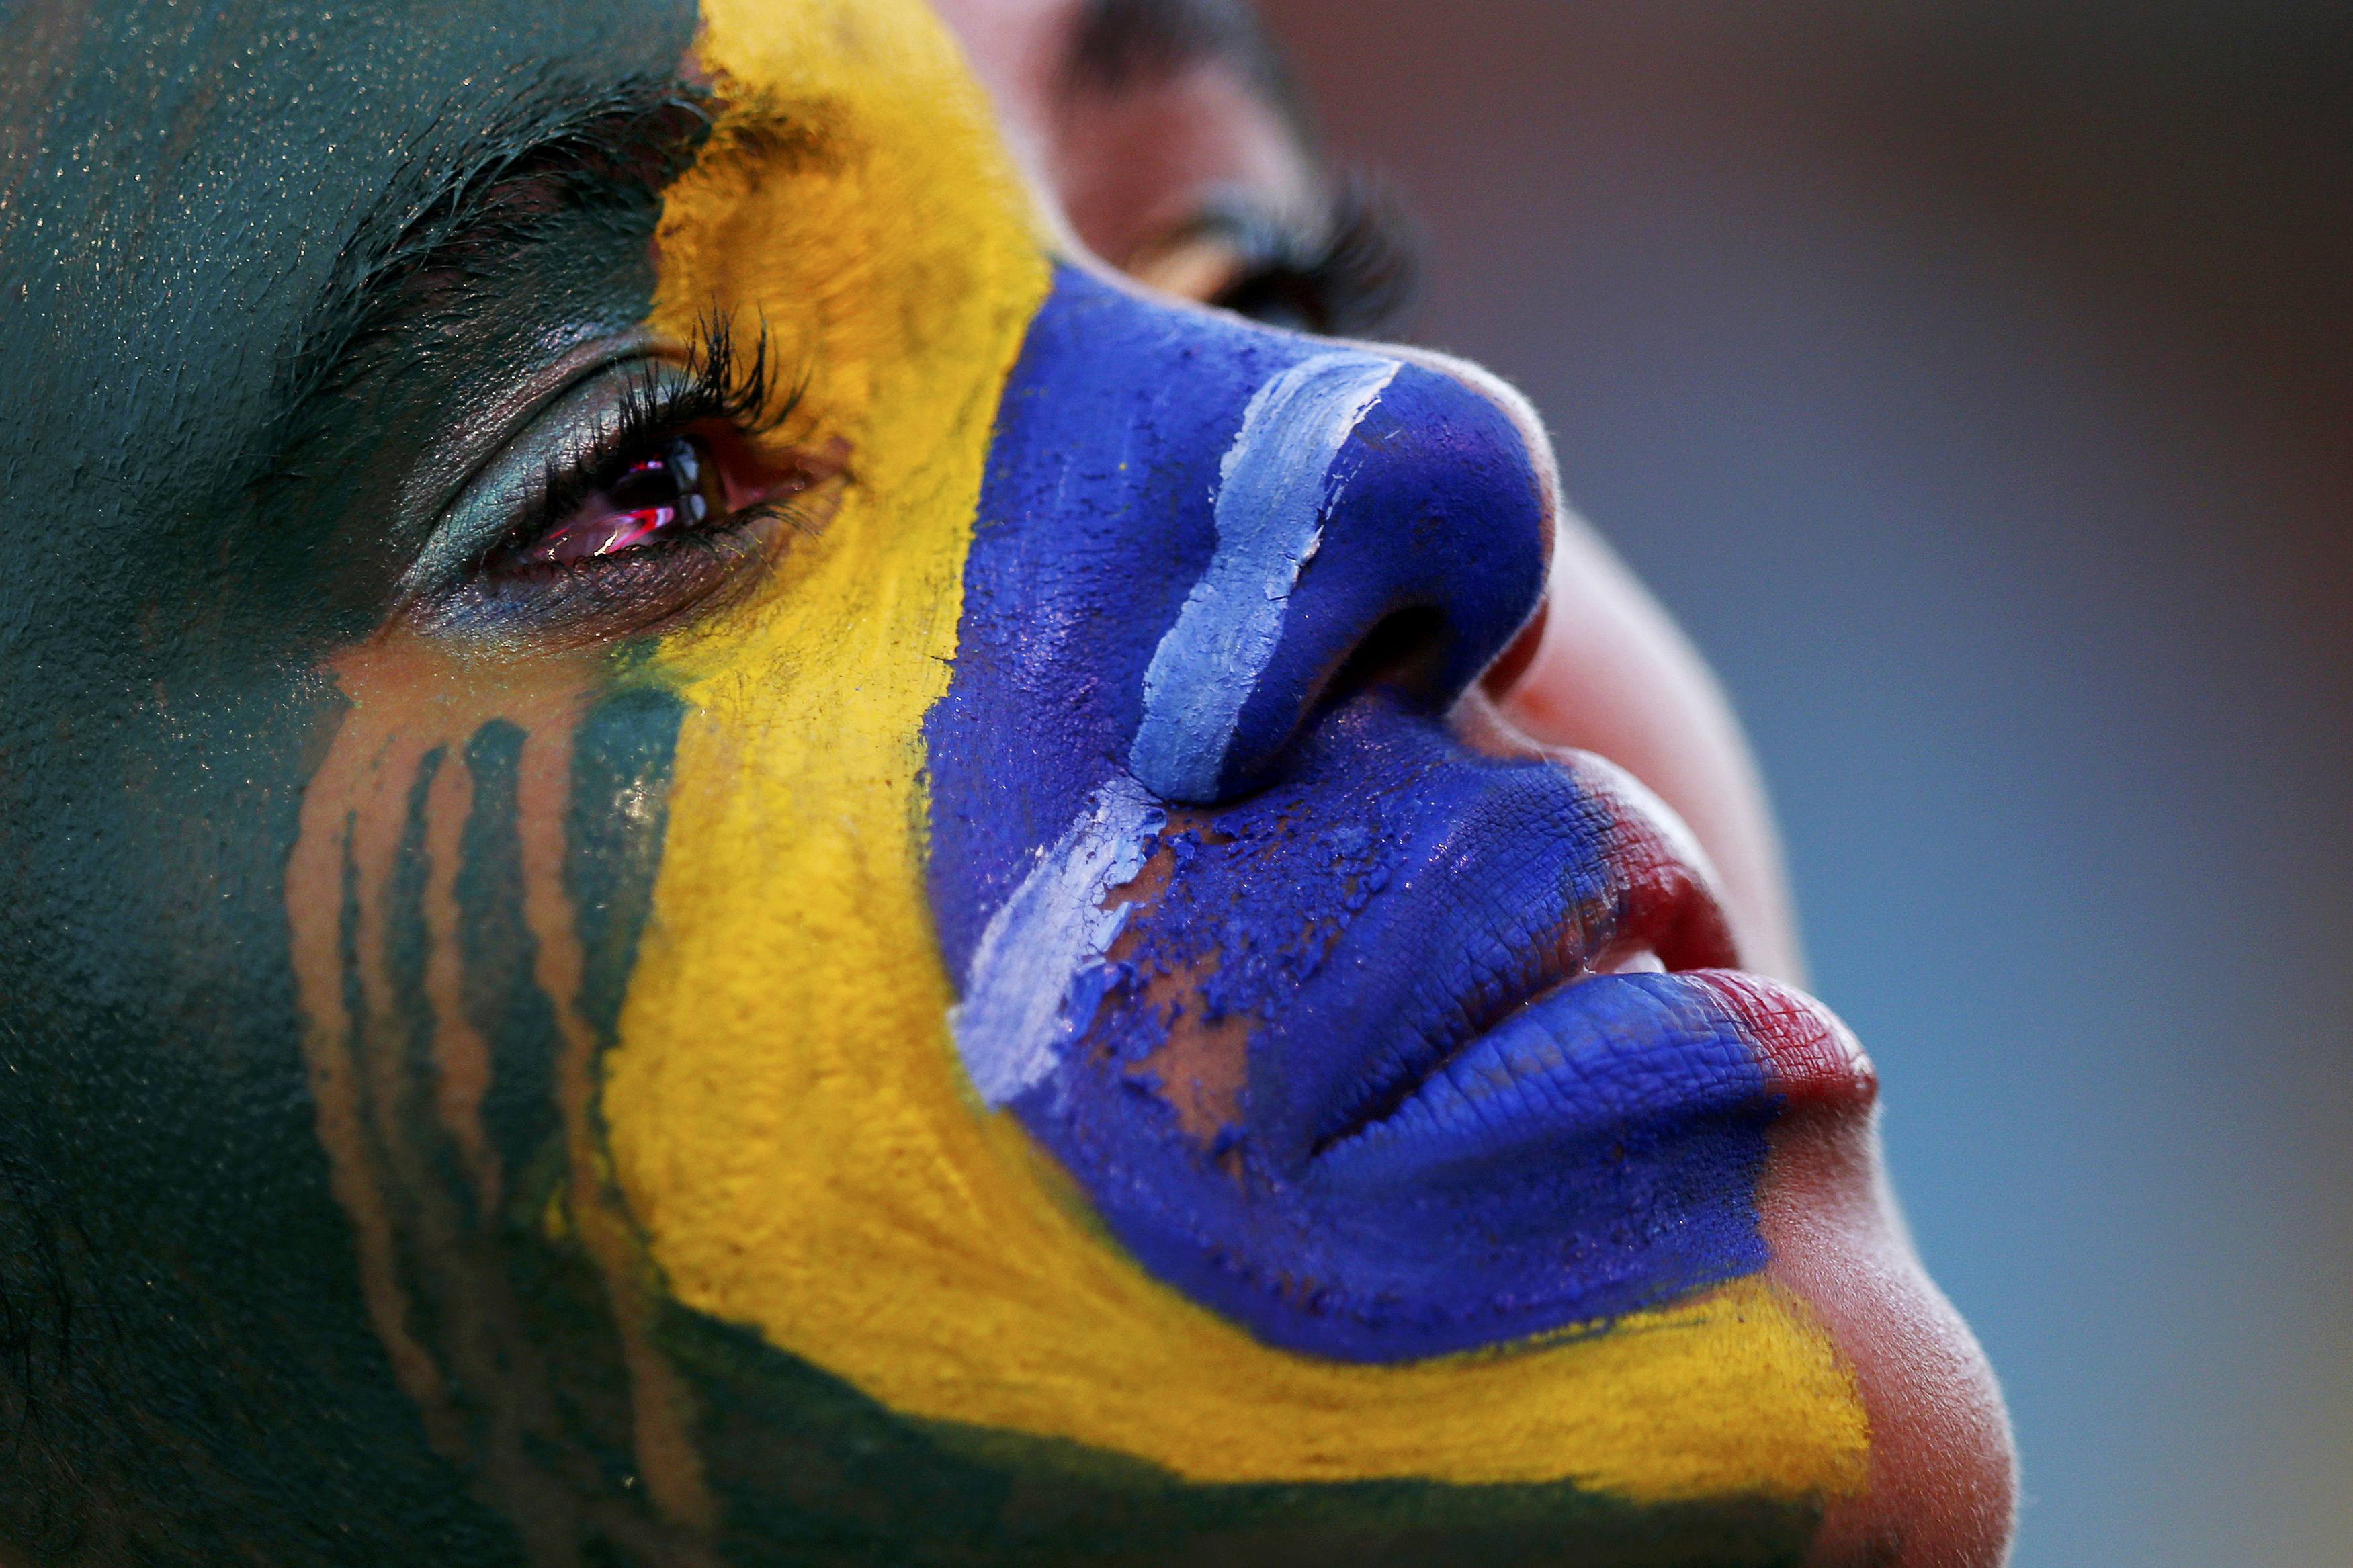 Raiva no brasil ilysam. Бразильский флаг на лице. Бразилия арт. Бразильские болельщицы в краске. Бразильские краски.